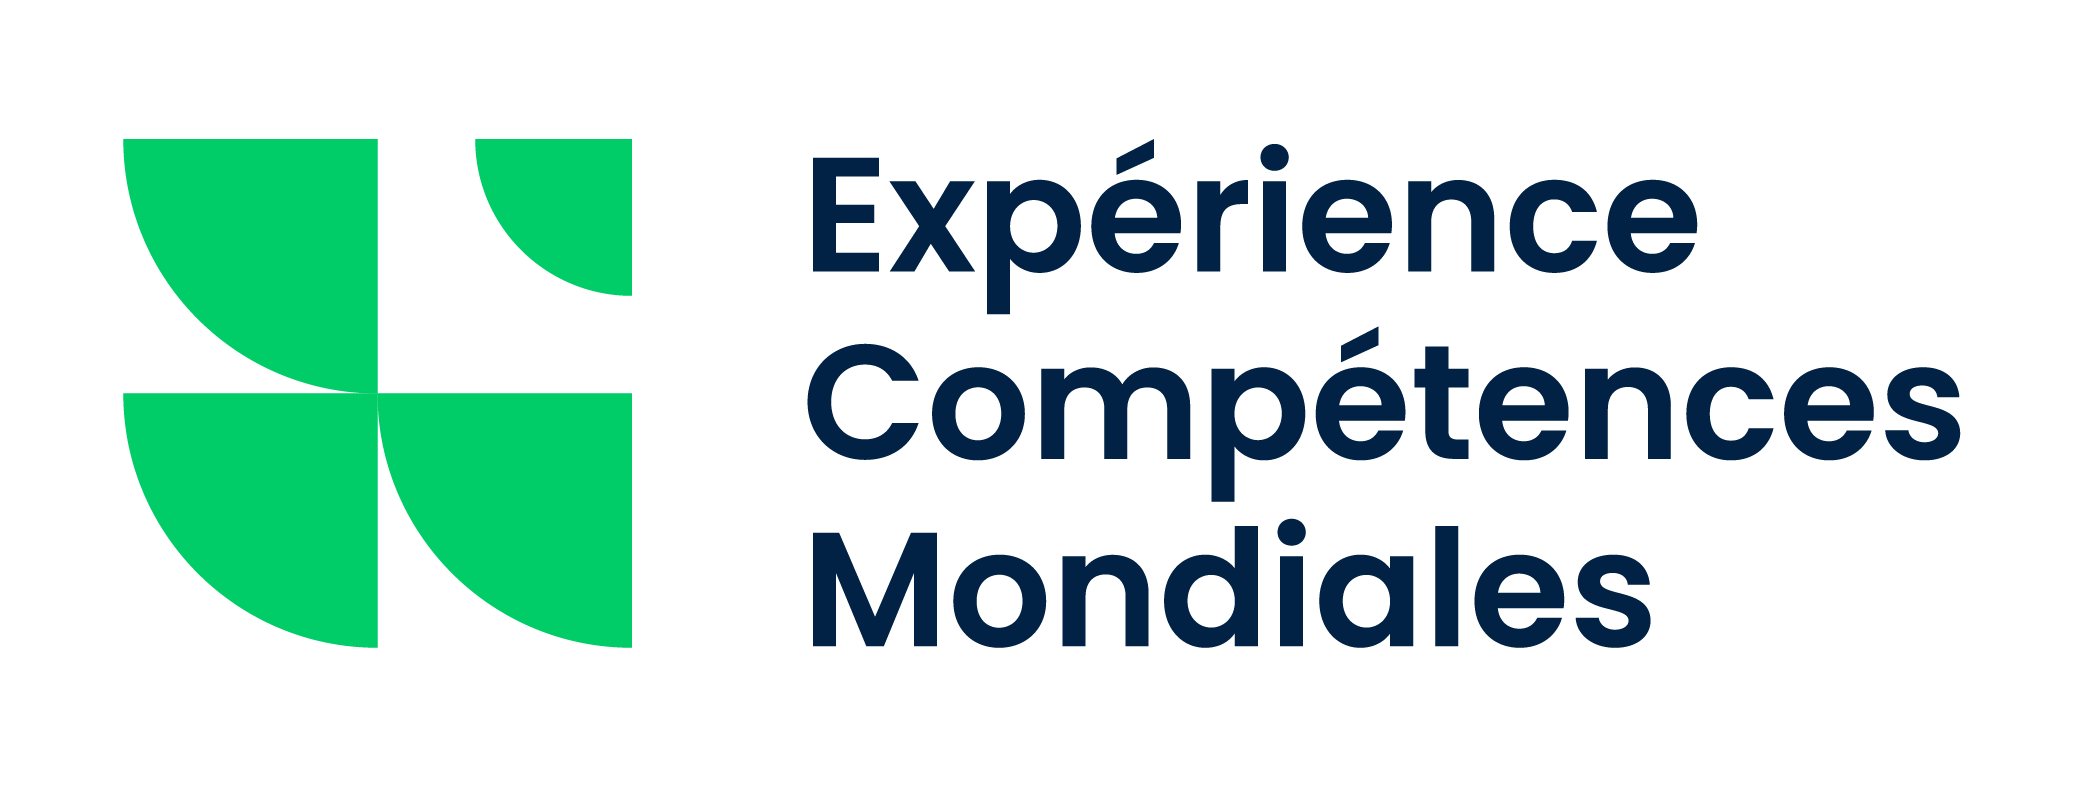 experience competences mondiales